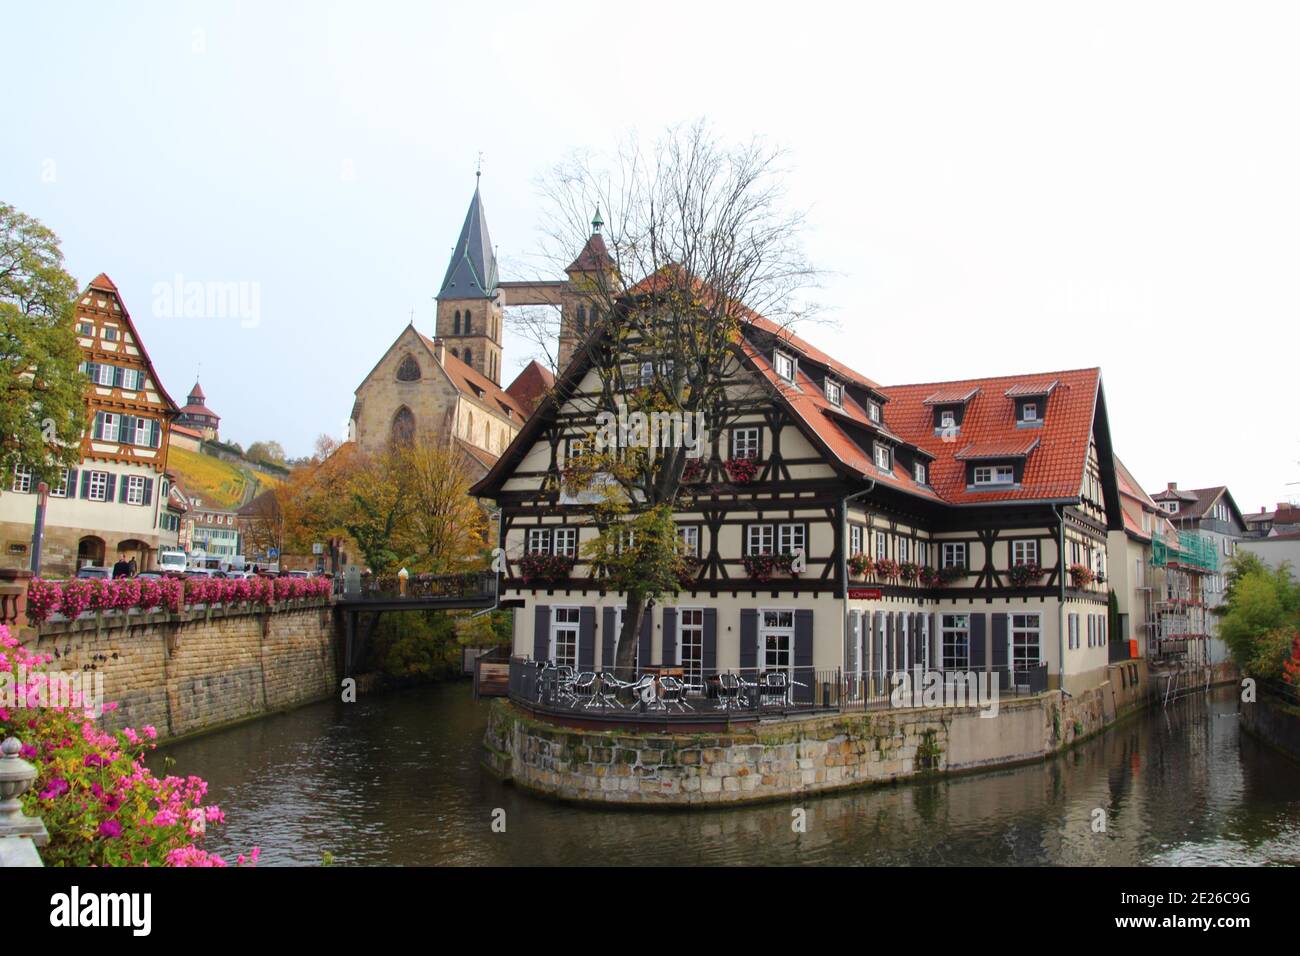 GERMANY, ESSLINGEN AM NECKAR, OCTOBER 24, 2017: Cityscape with 'Alte Zimmerei', 'Stadtkirche' and 'Big Tower' at the Rossneckarkanal in Esslingen Stock Photo